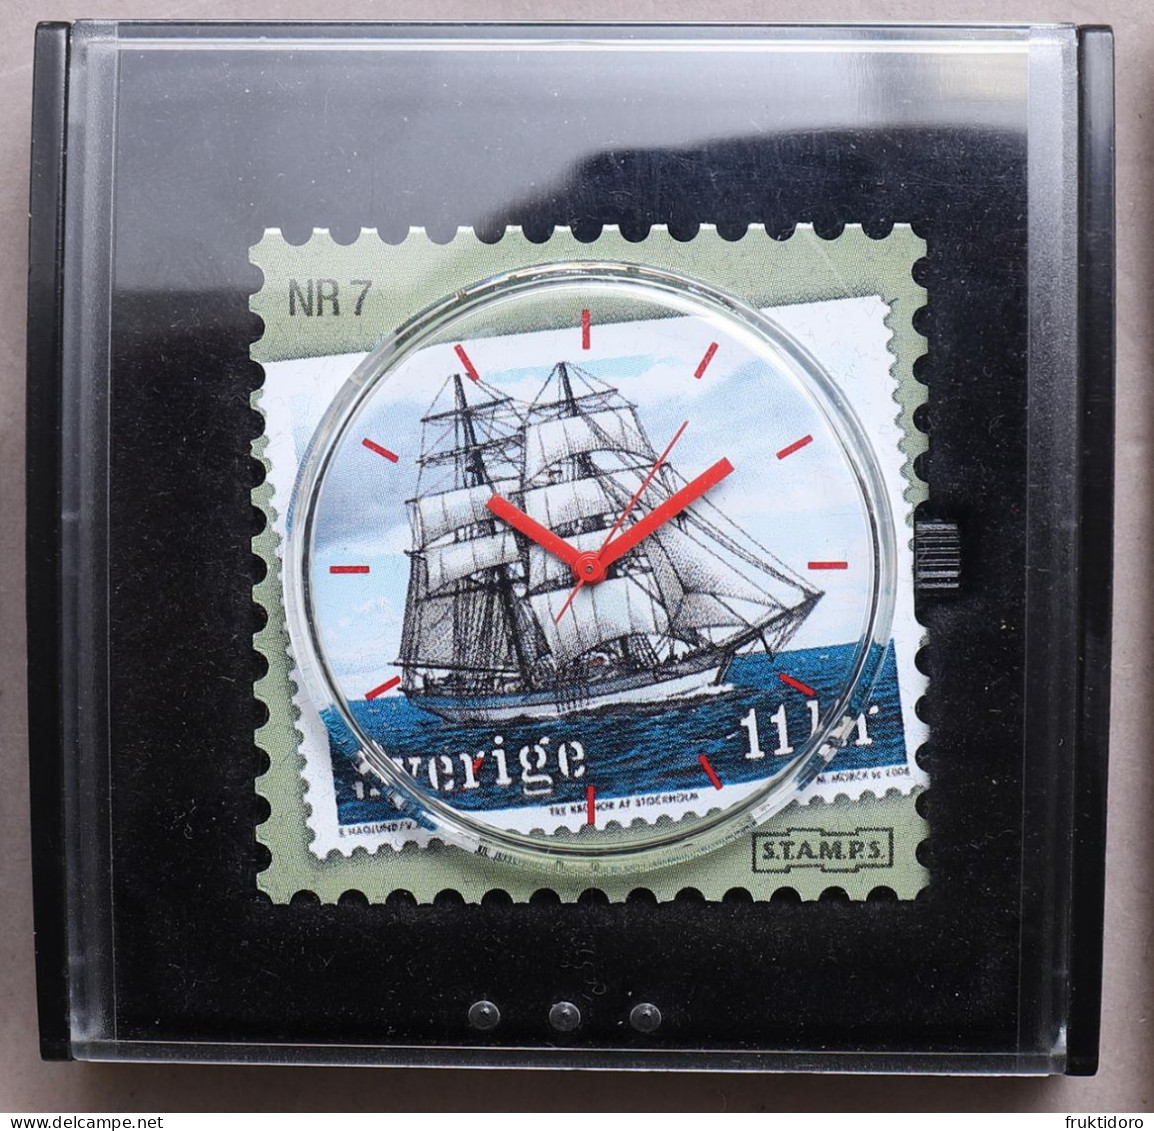 Sweden Stamp Clock Nr 7 - Sailboat T/S Gunilla - 2008 - Relojes Modernos